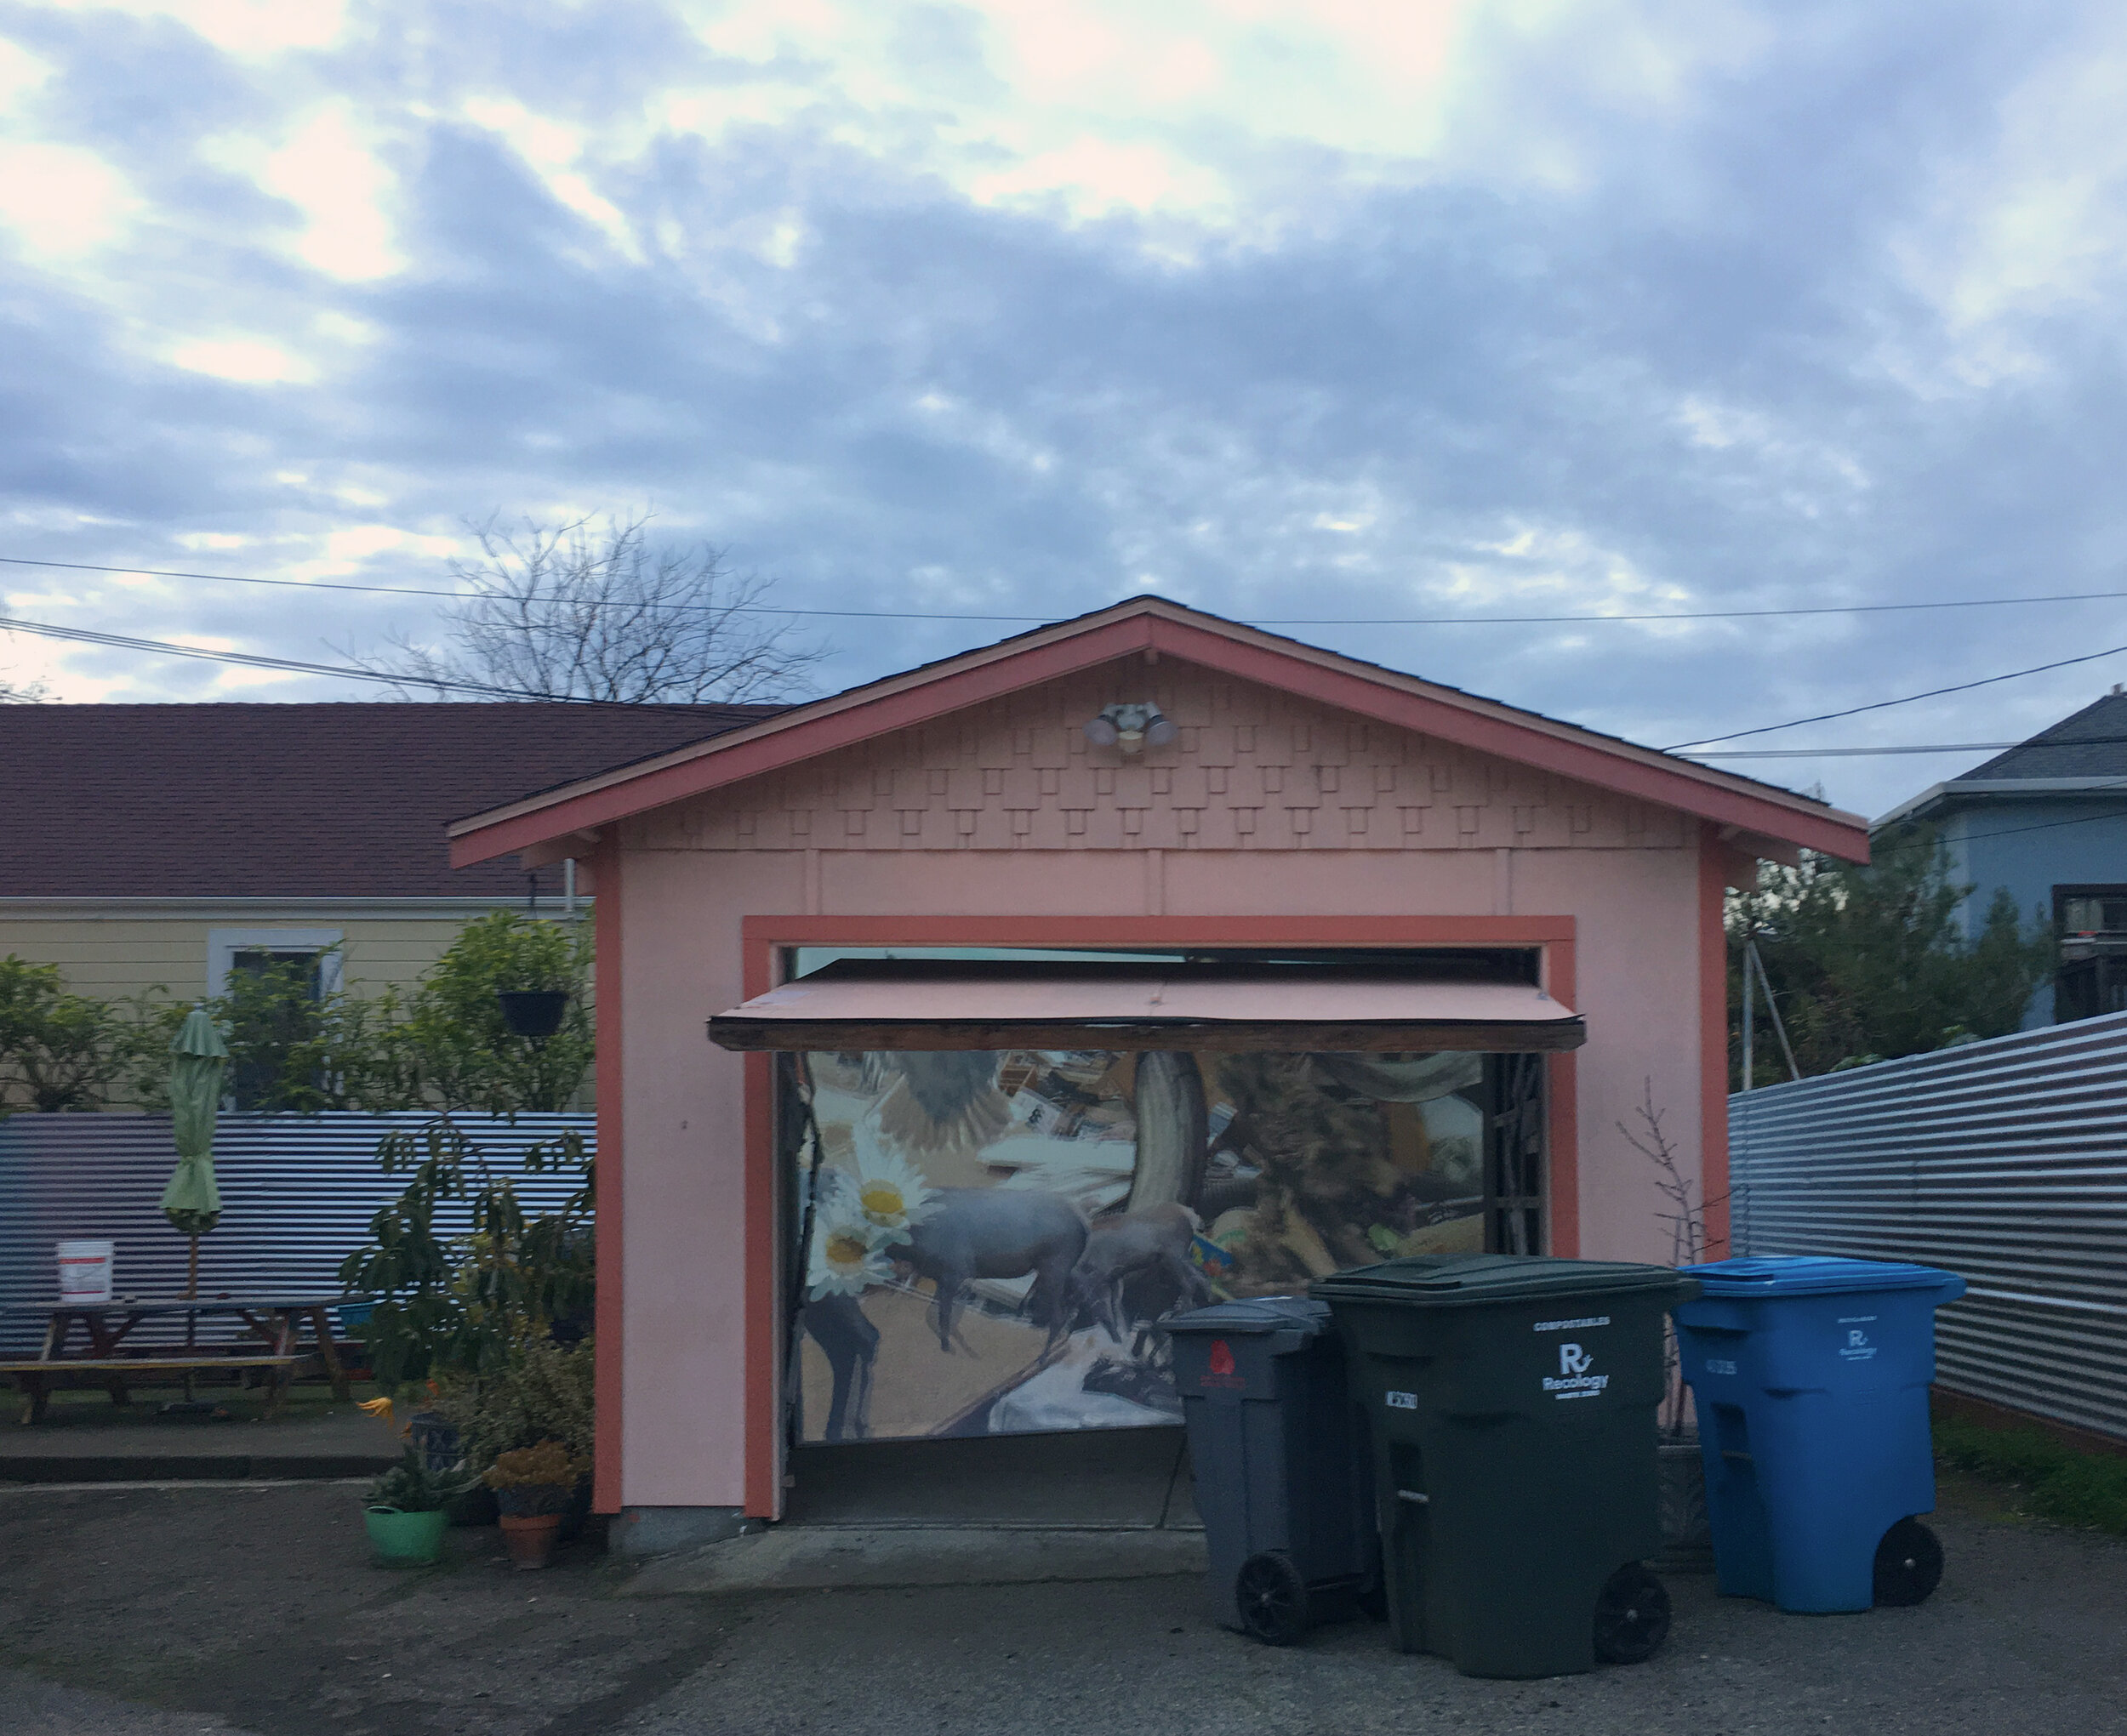    “Crap Aggregates”, Brittany, Vallejo, CA, 2020    